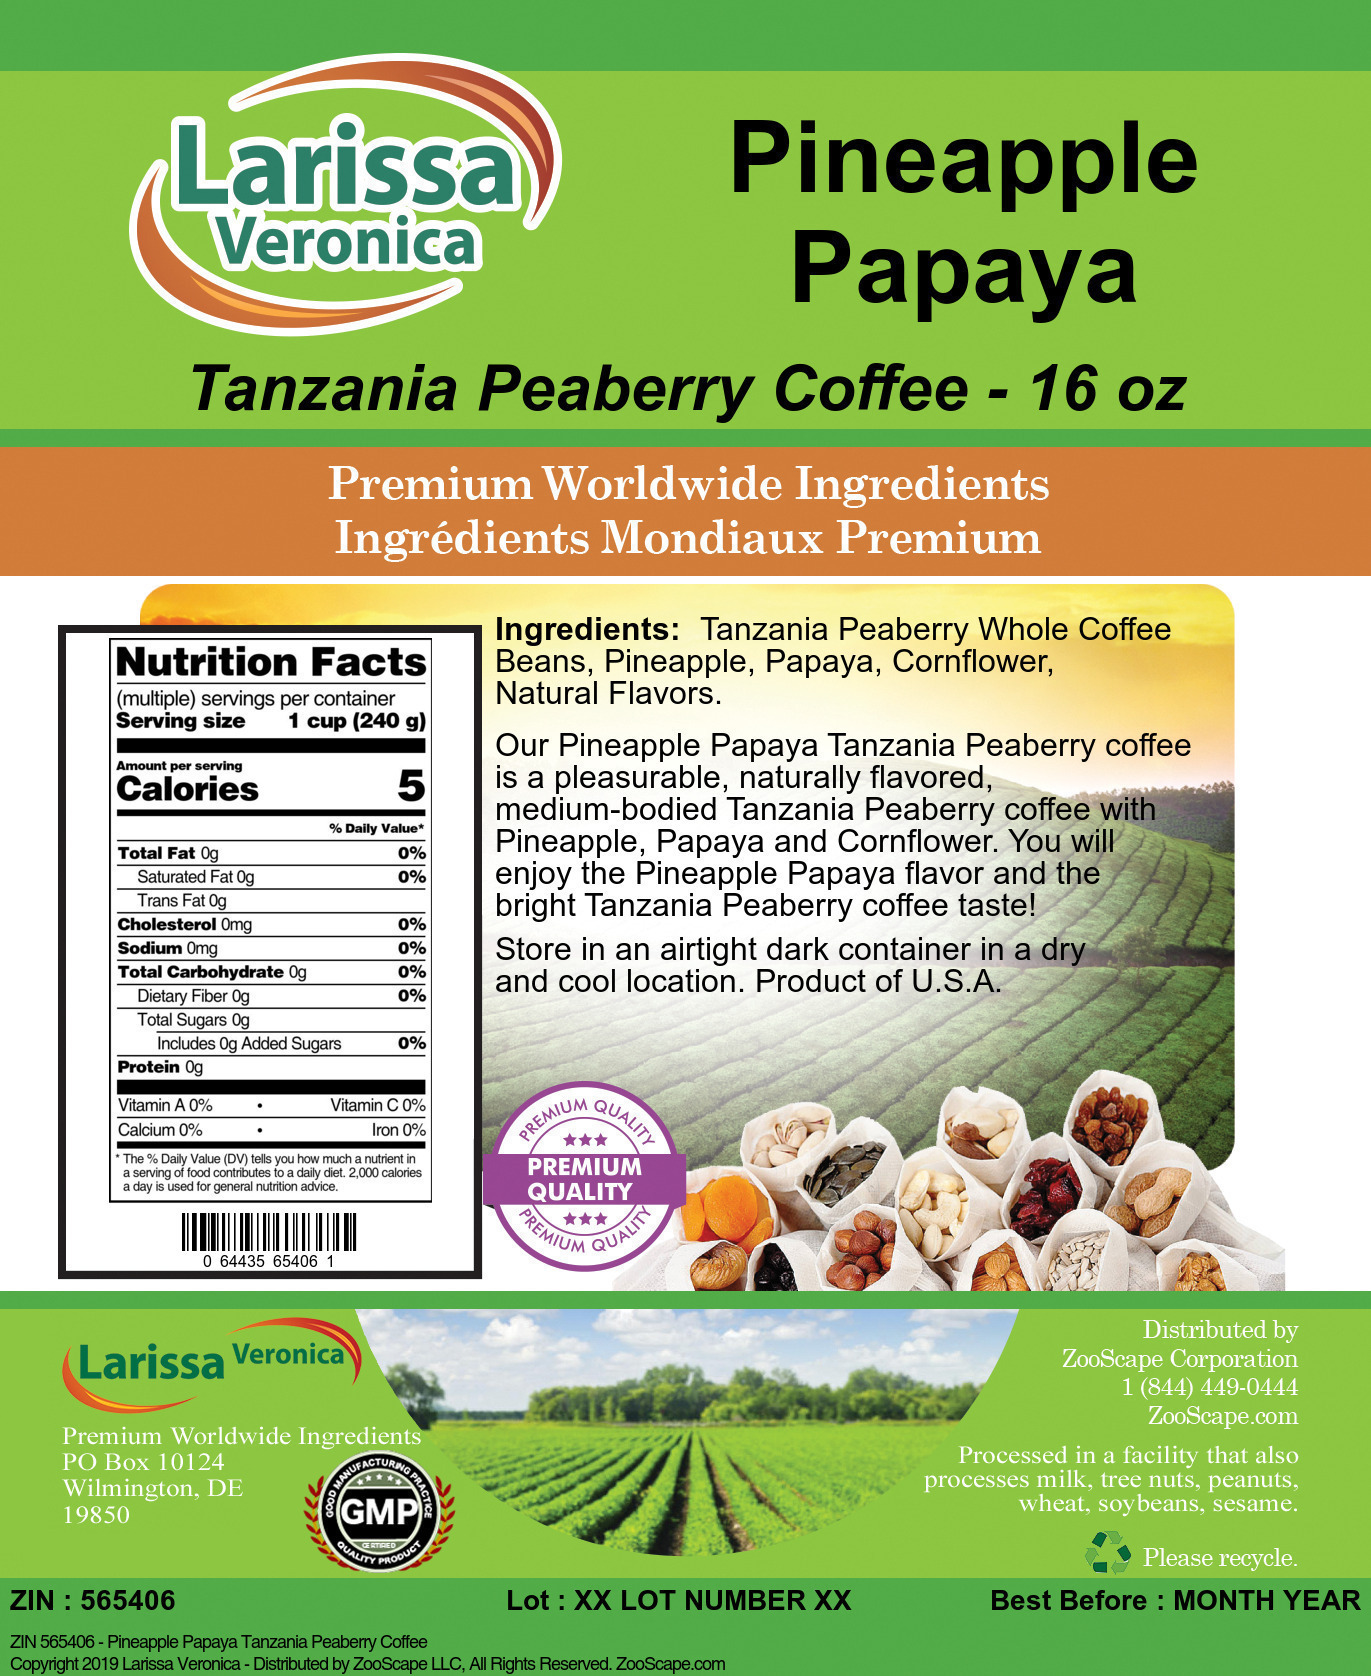 Pineapple Papaya Tanzania Peaberry Coffee - Label